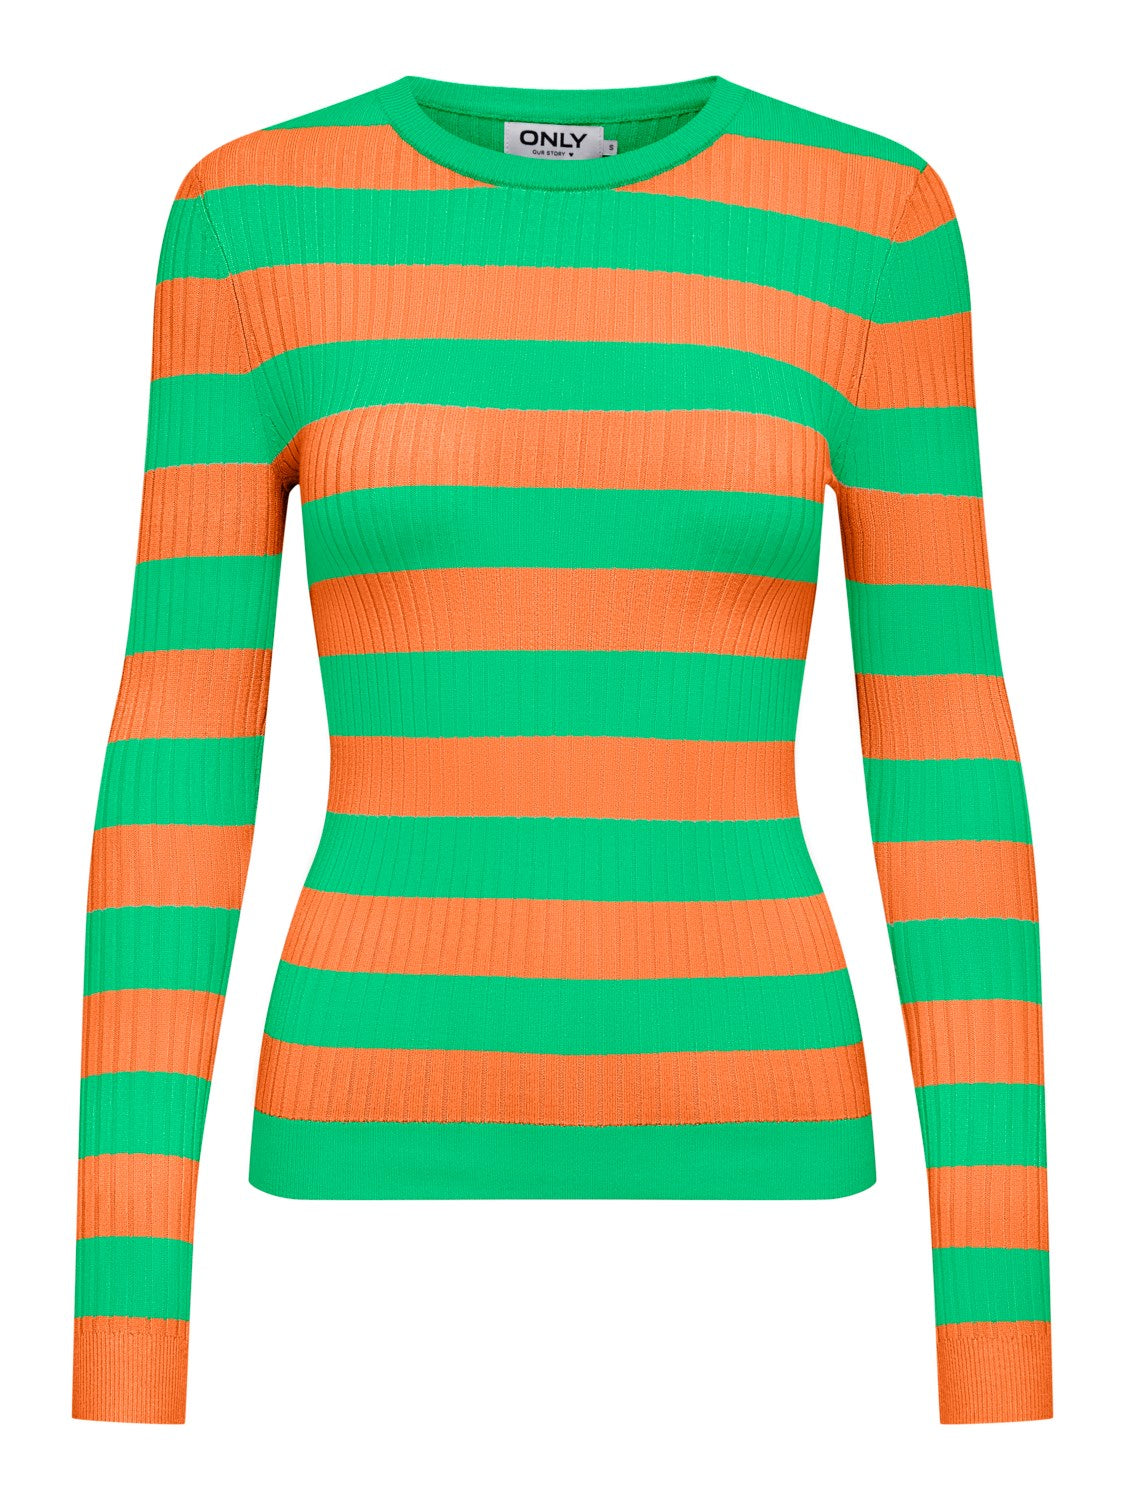 Only - Orange & Green Stripe Knit Top